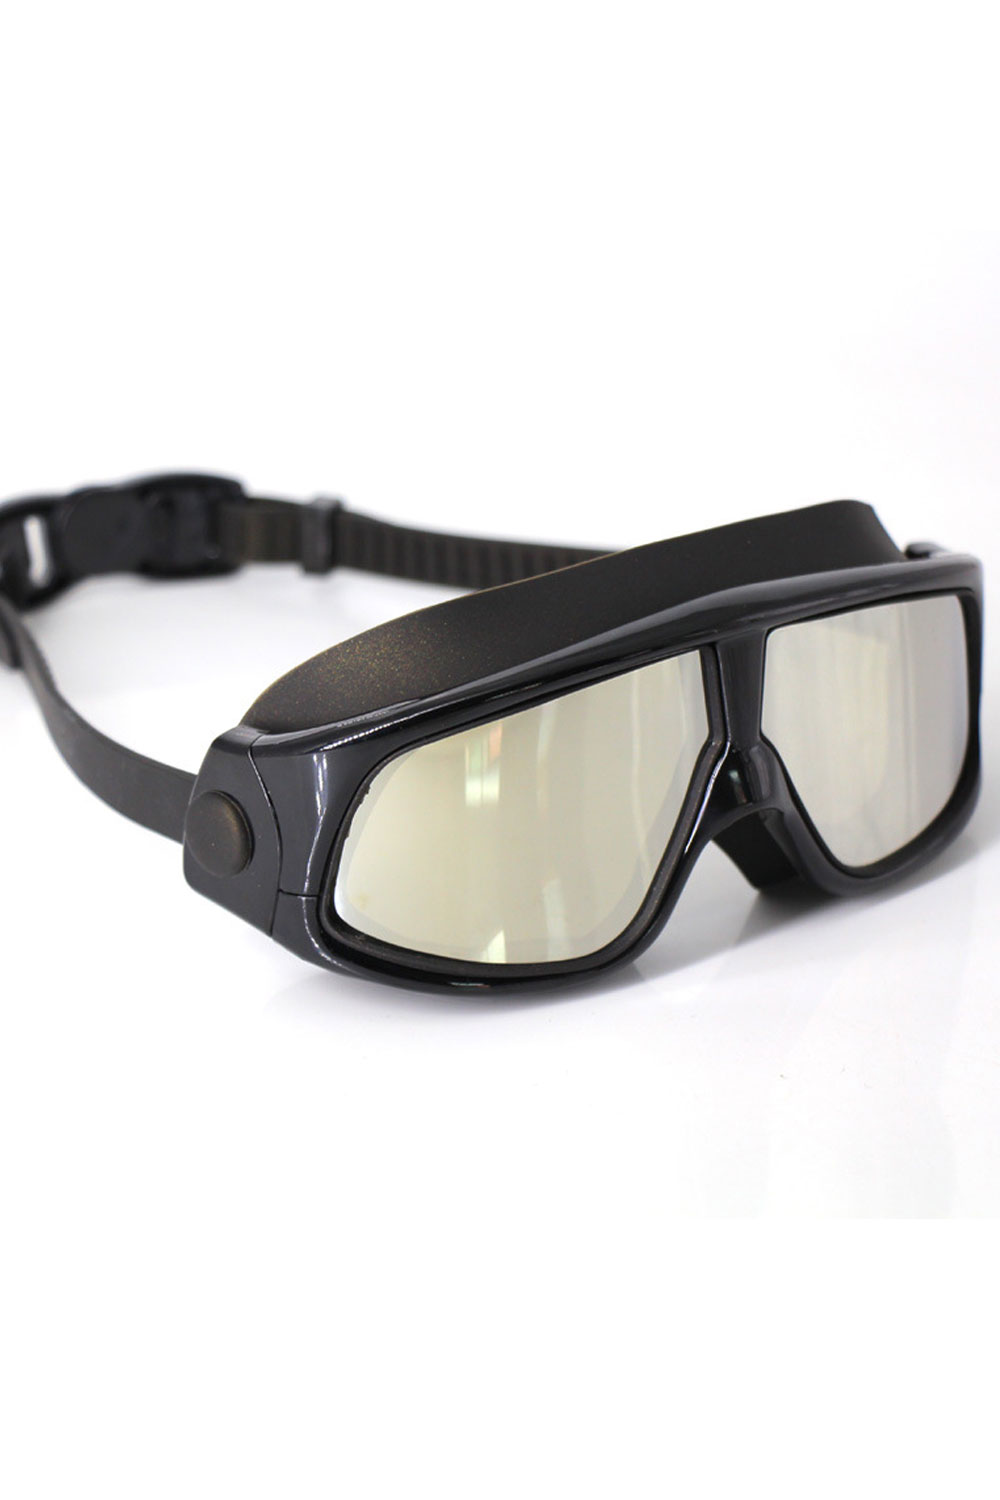 Ketty More Water Sports Silicone Earplugs Anti UV No Leak Kids Swimming Goggles